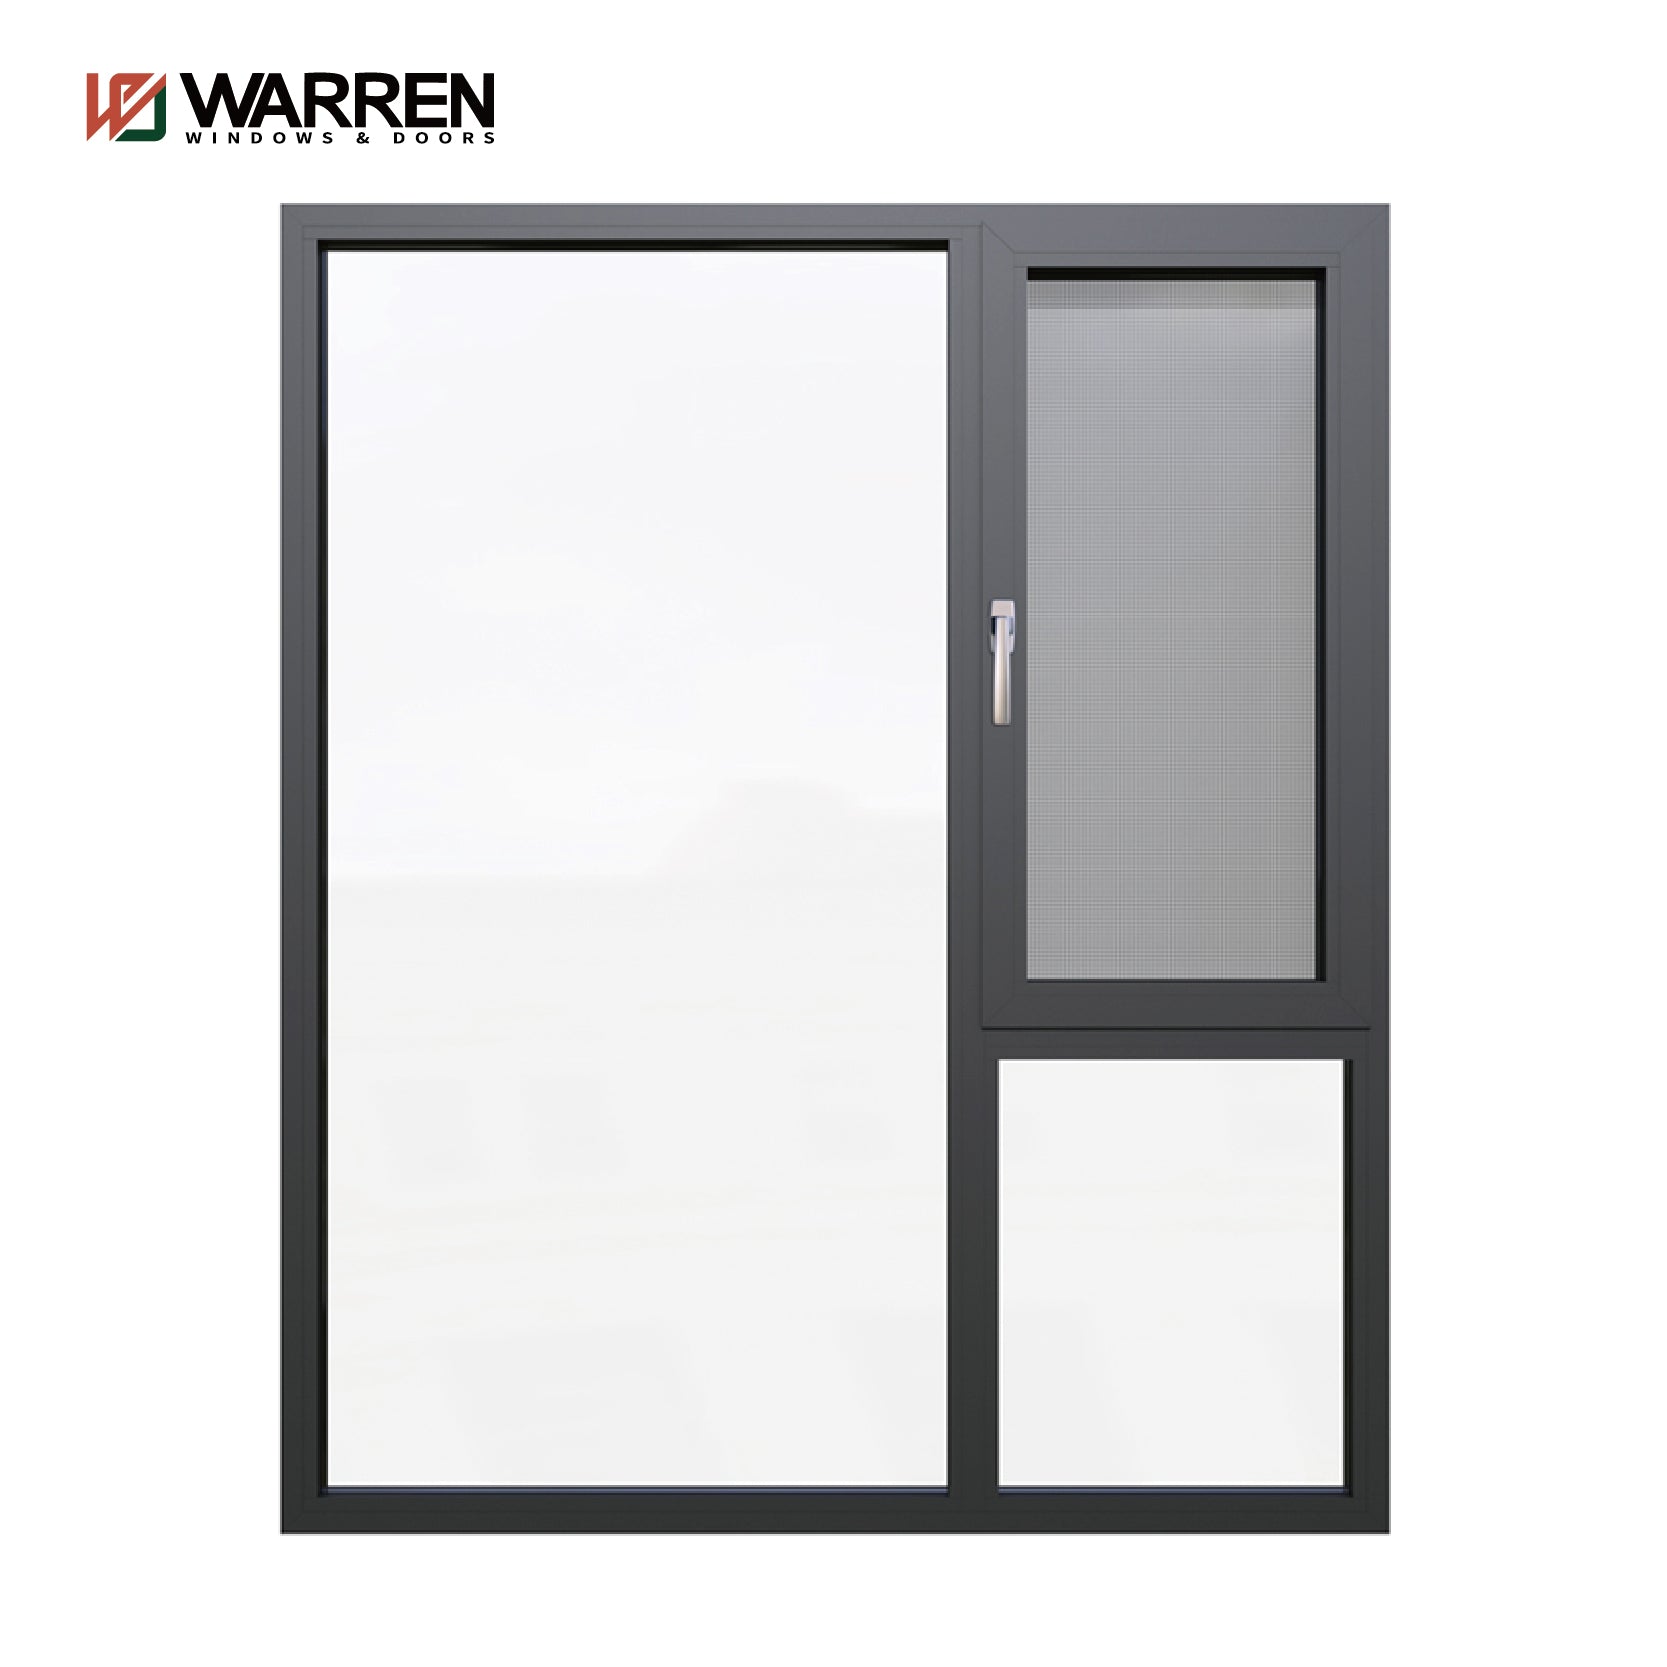 Warren New Hot Product All Houses Double Glass Aluminium Tilt Turn Windows Window With A Screen